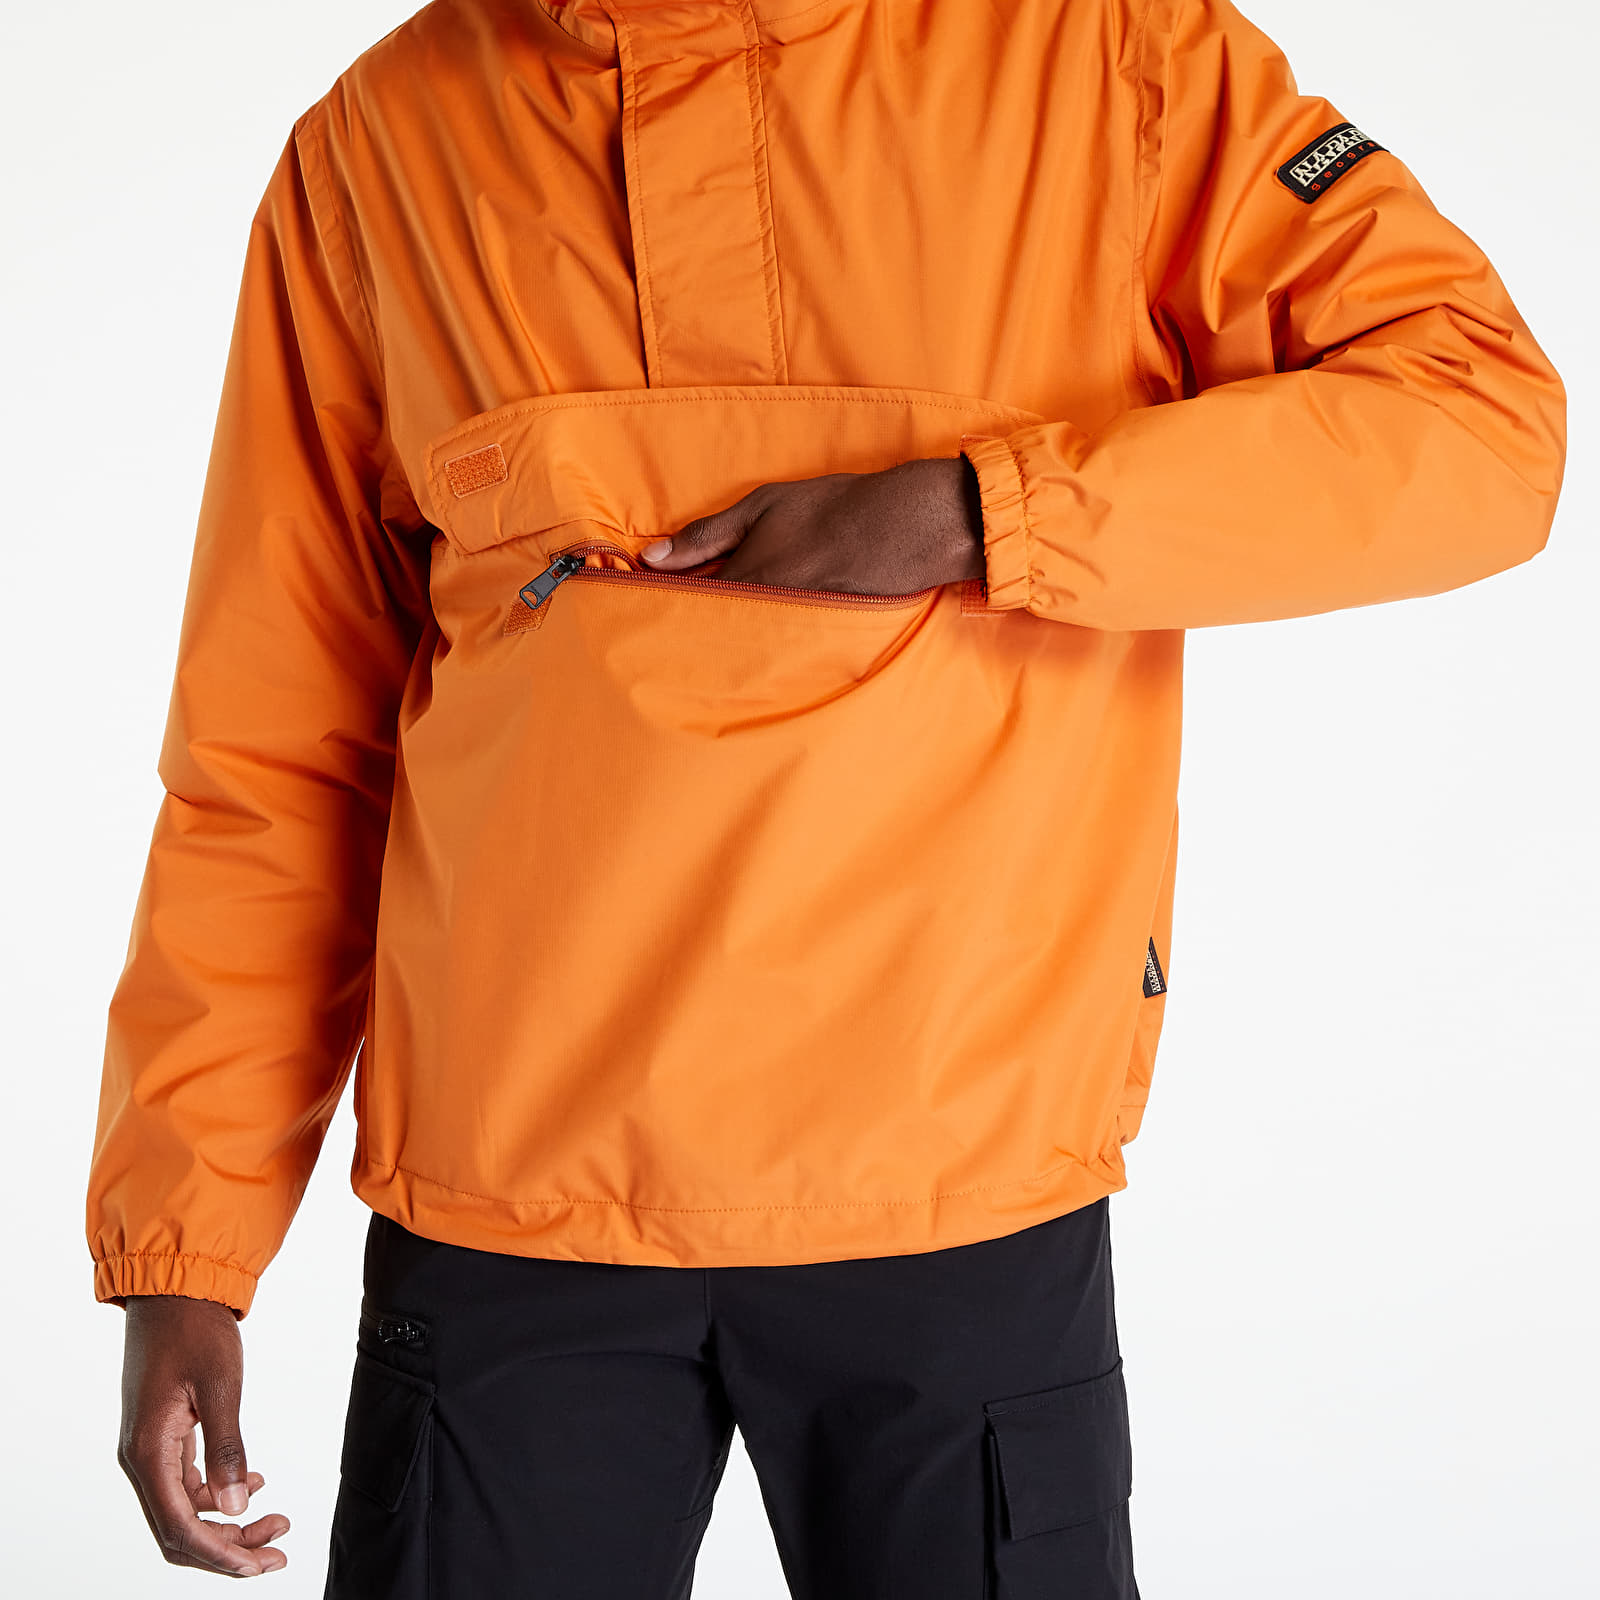 Bundy NAPAPIJRI Rf Freestrider 1 Jacket Orange Buttern